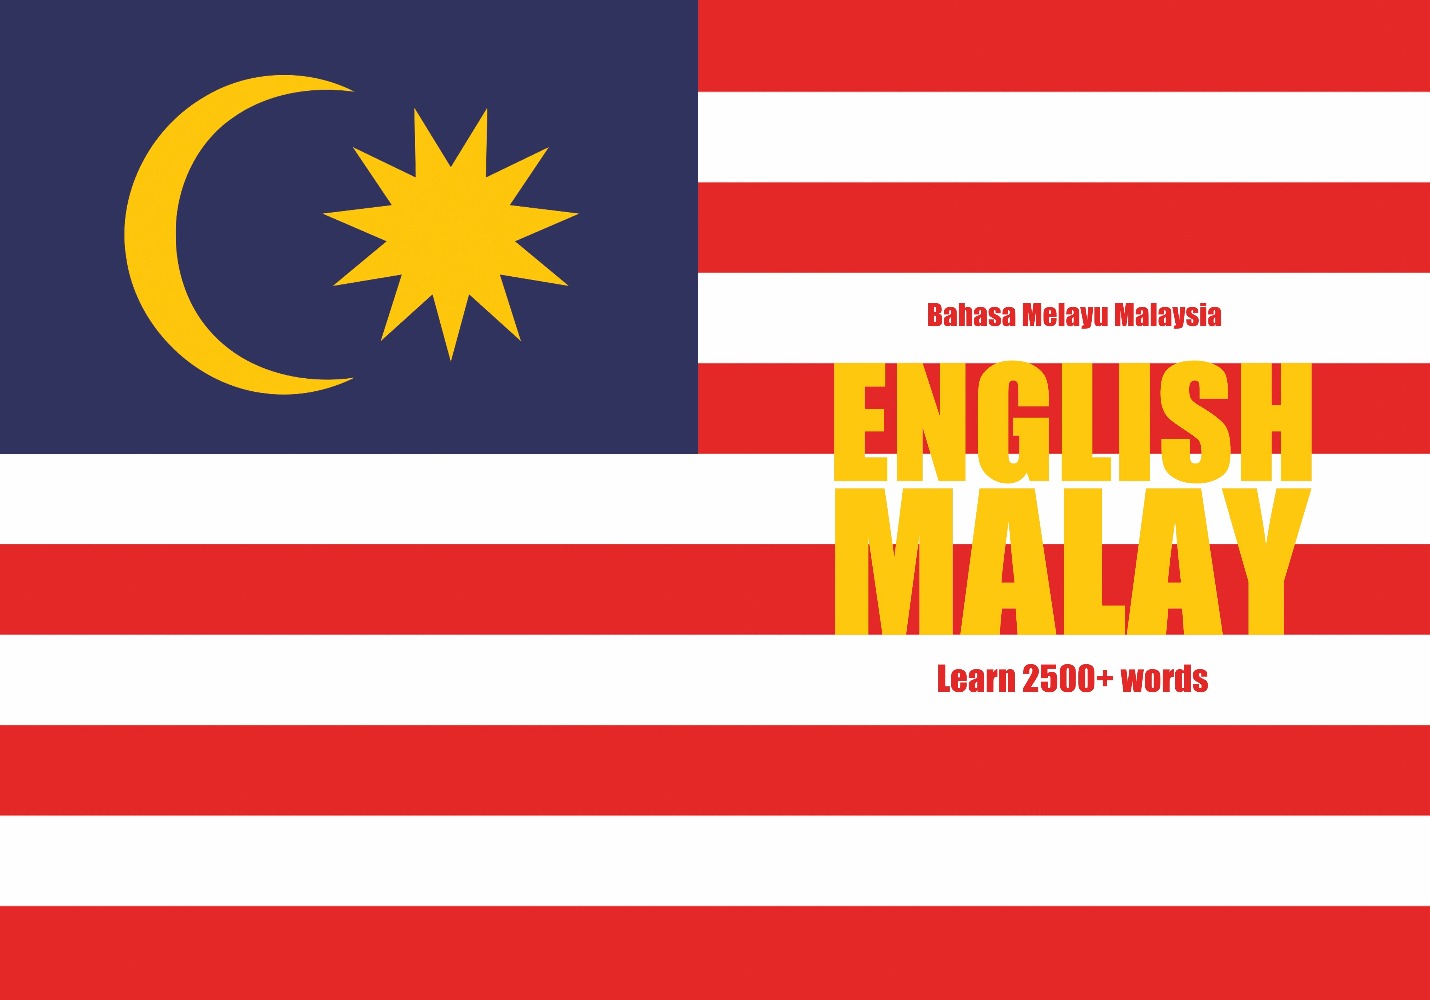 Malaysian Malay language notebook cover